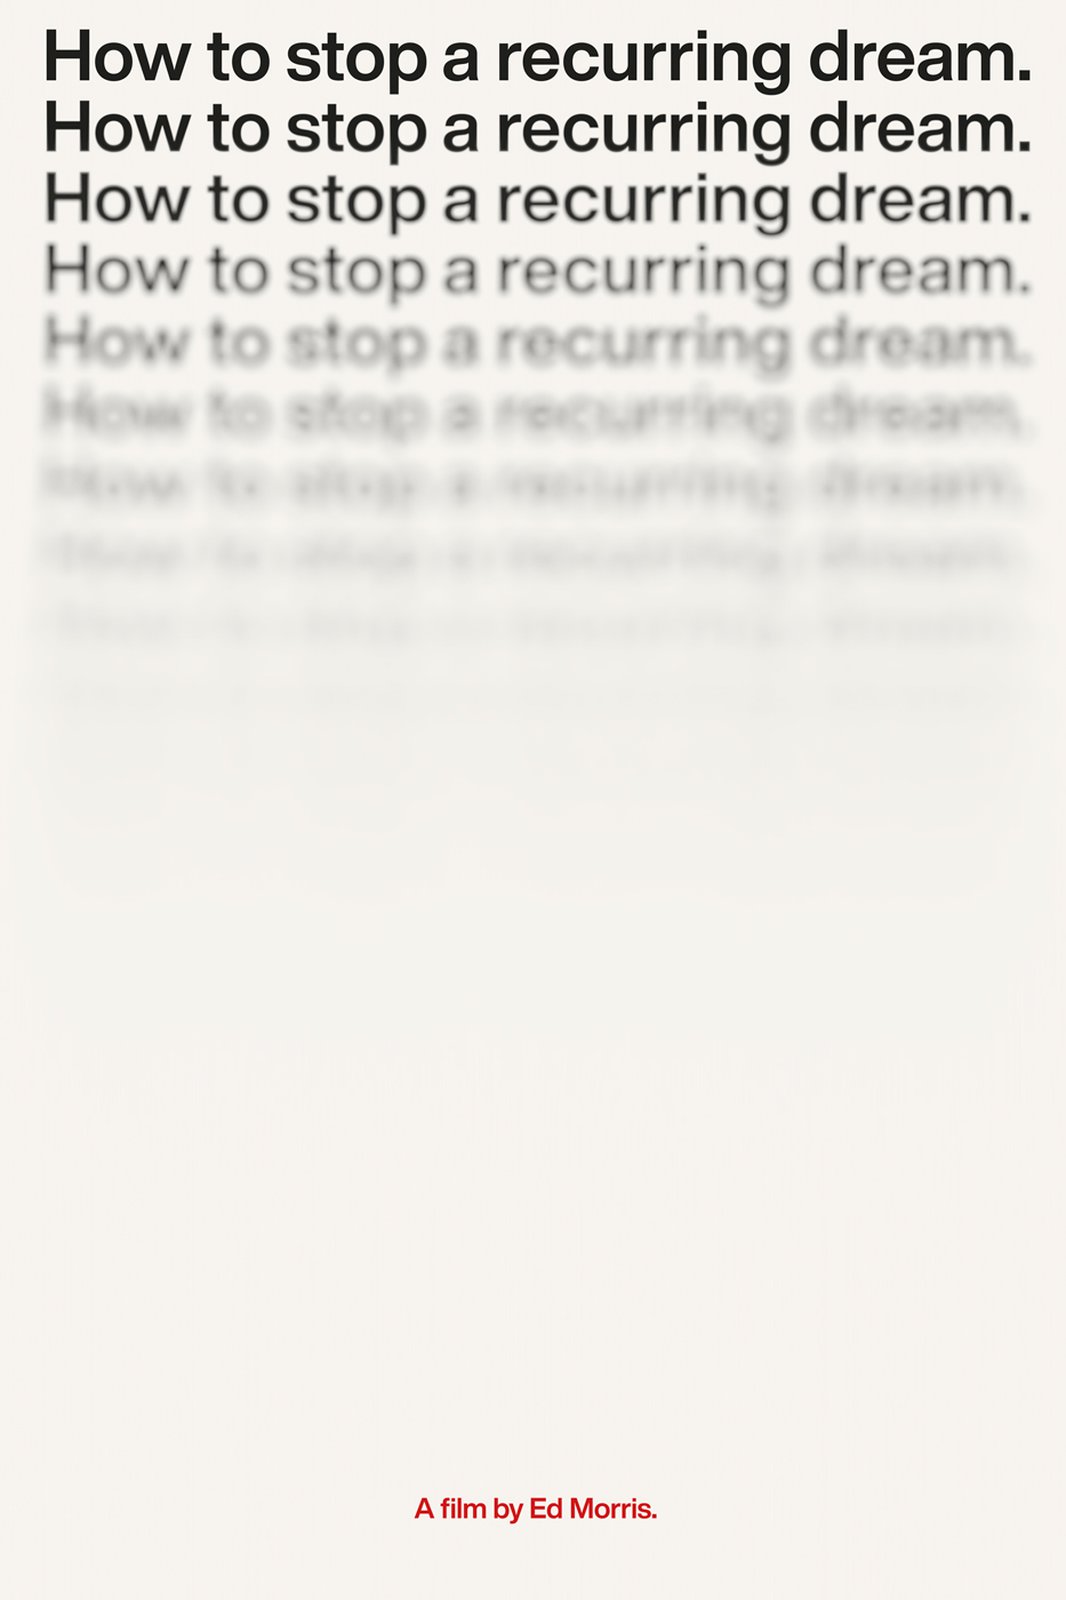 paul_belford_ltd_how_to_stop_a_recurring_dream_poster.jpg